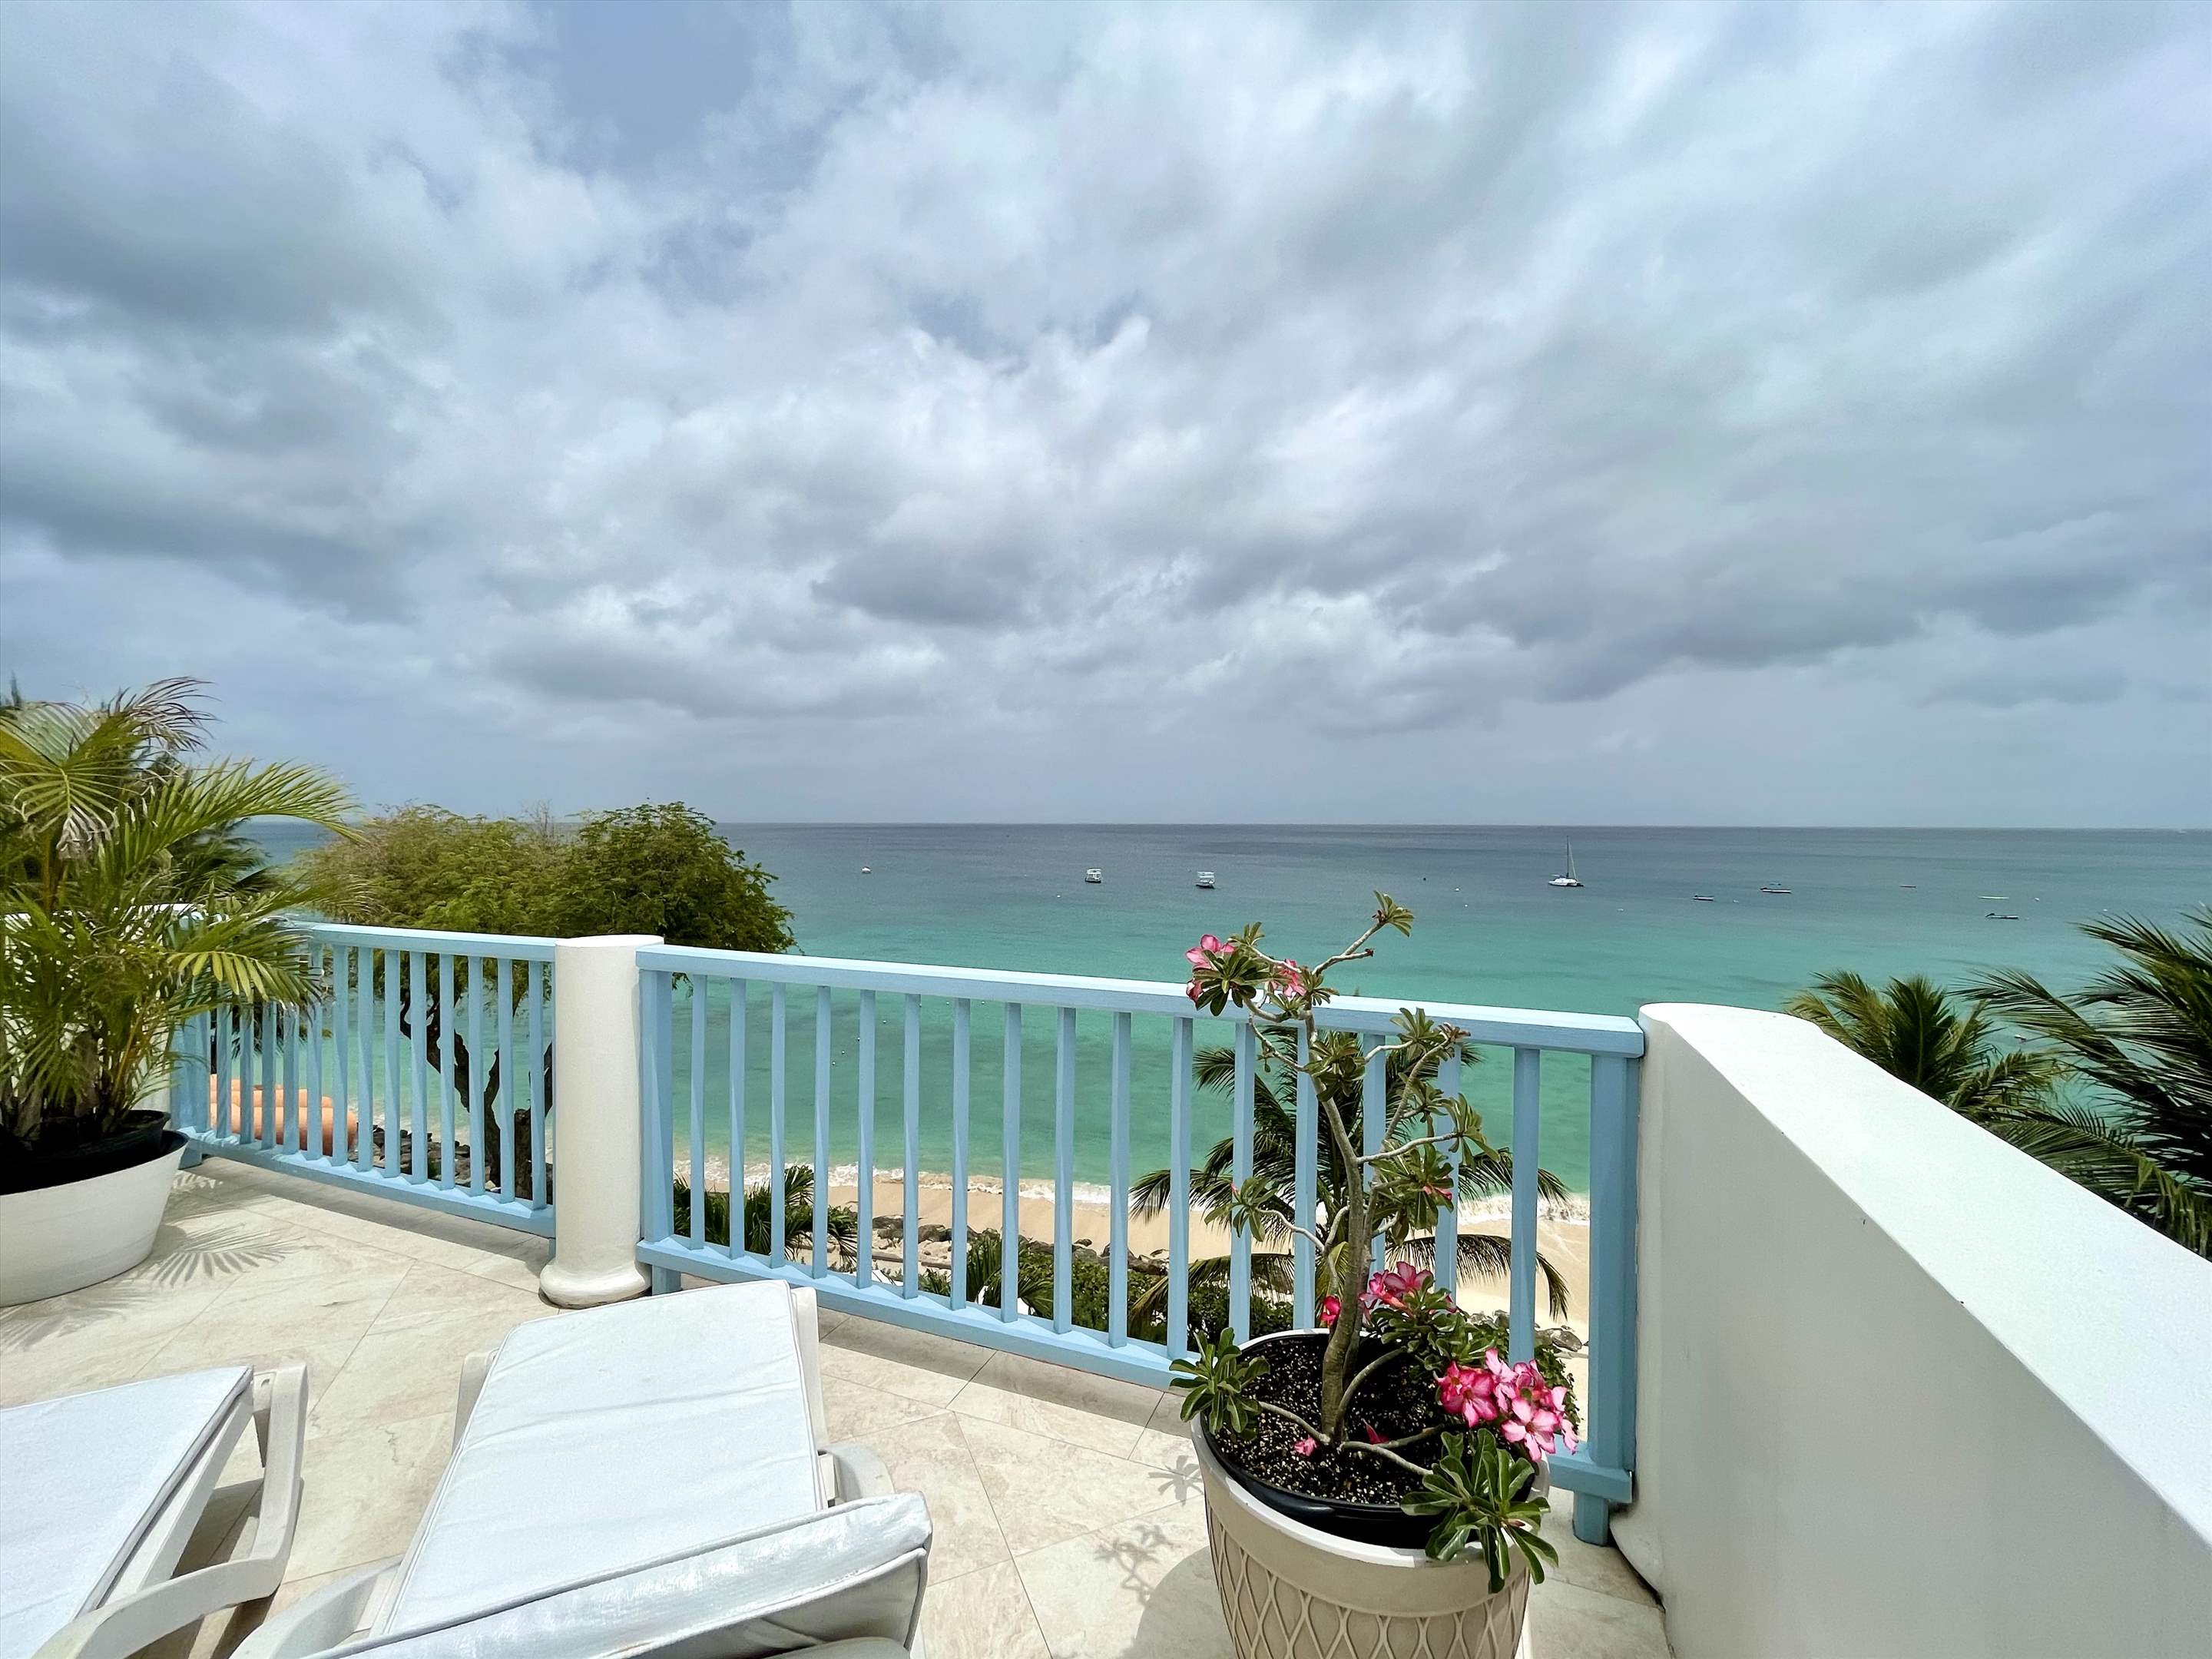 Villas on the Beach 403, 3 bedroom, 3 bedroom apartment in St. James & West Coast, Barbados Photo #18